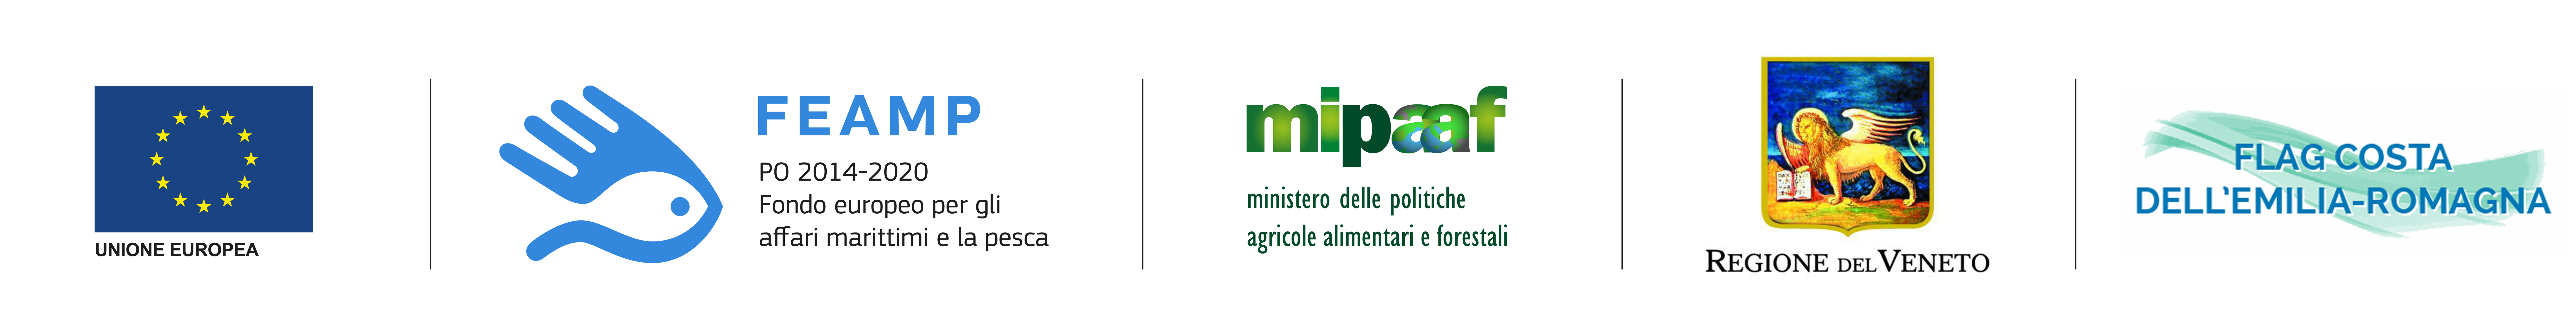 UE+FEAMP+MIPAAF+VENETO+FLAG.jpg